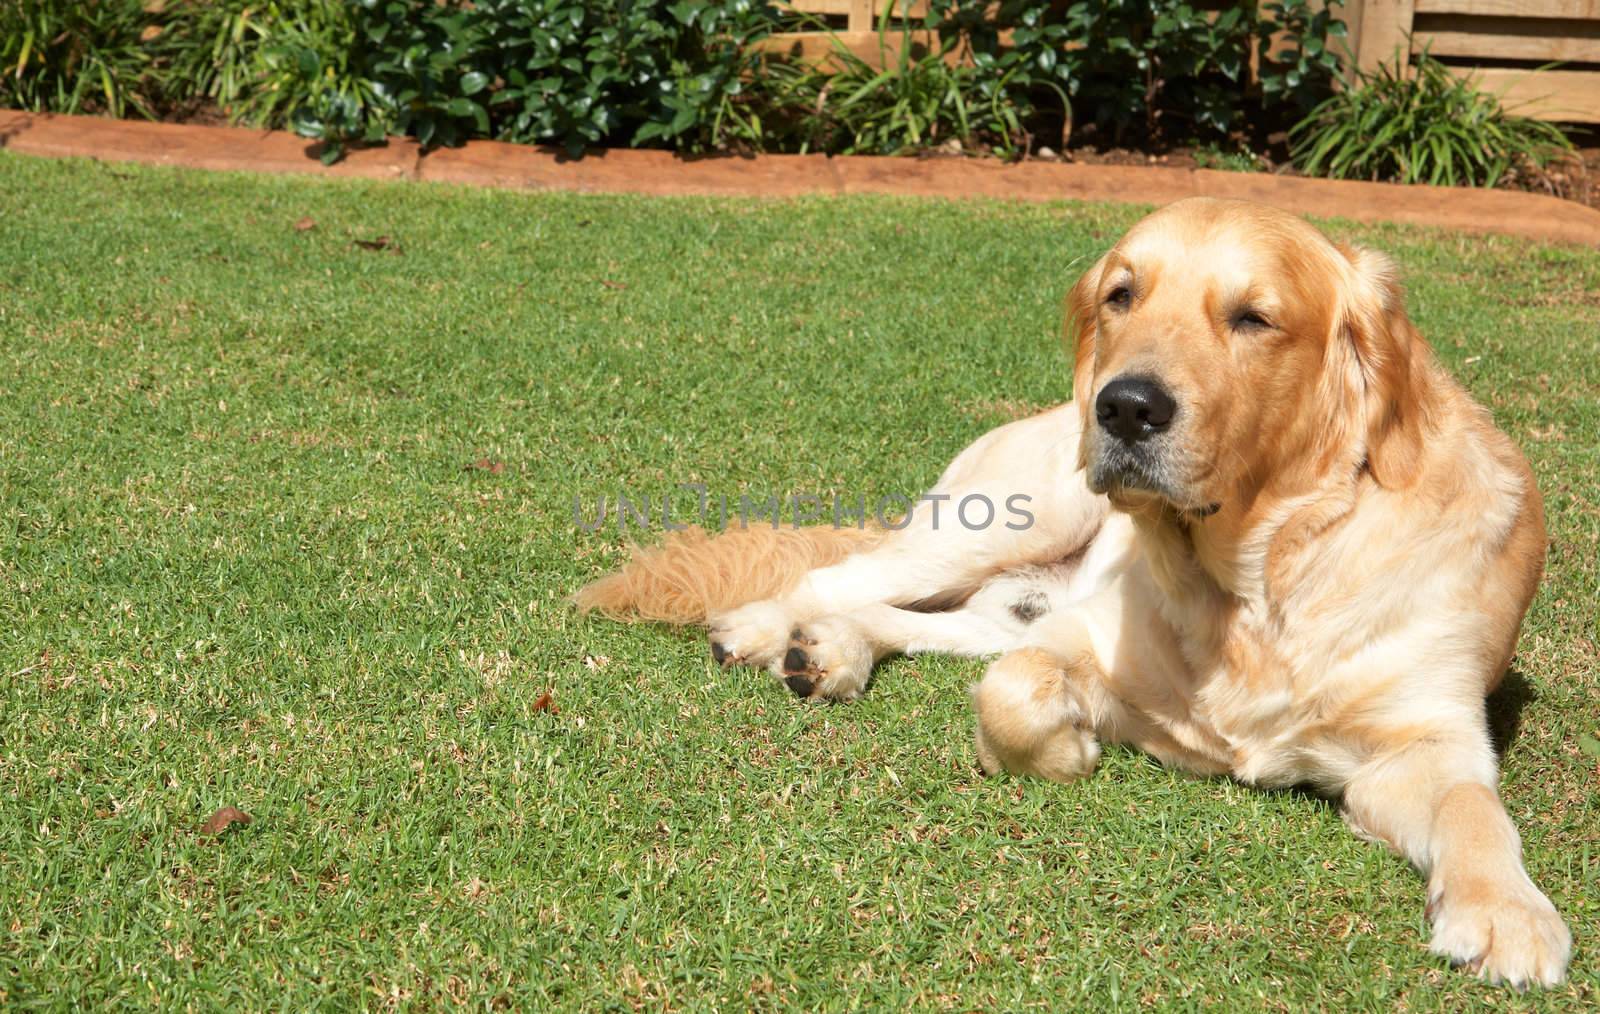 Golden retriever dog lying on the green grass in the garden